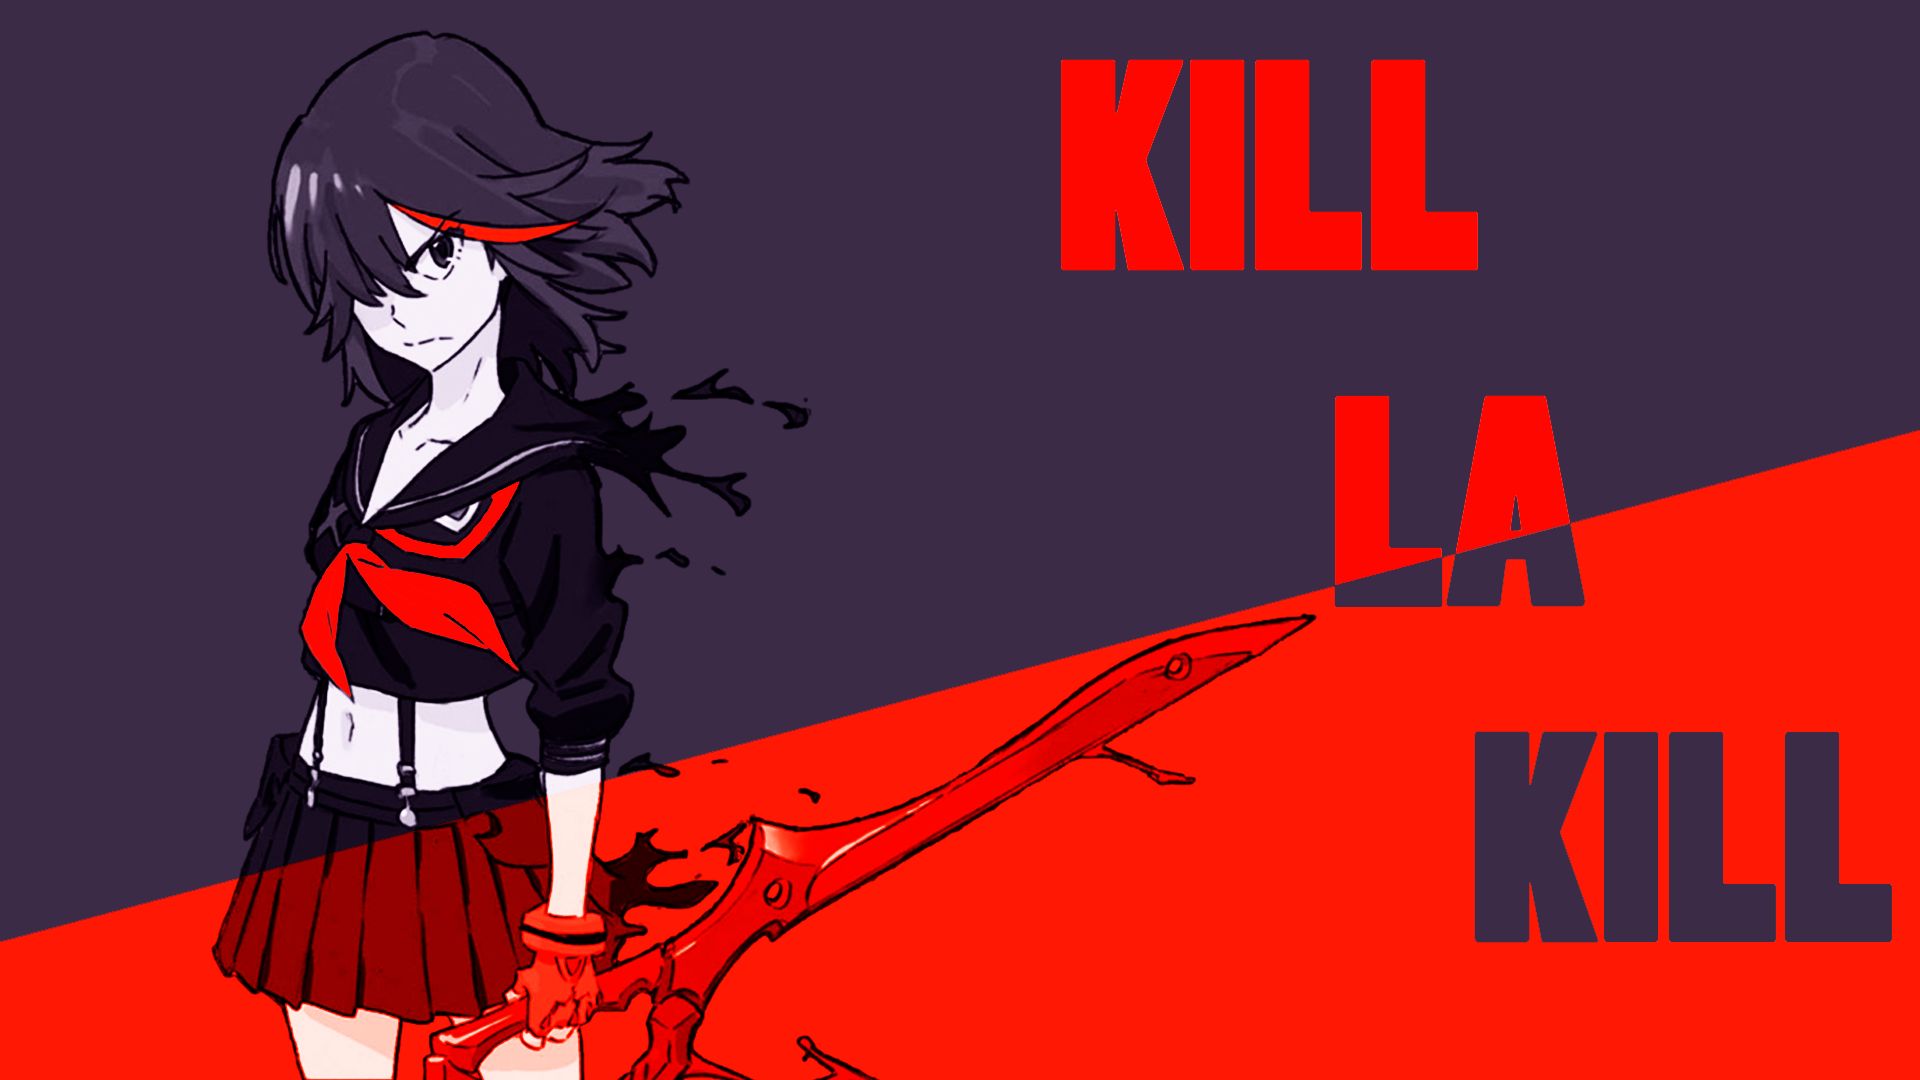 628642 descargar imagen animado, kiru ra kiru: kill la kill: fondos de pantalla y protectores de pantalla gratis